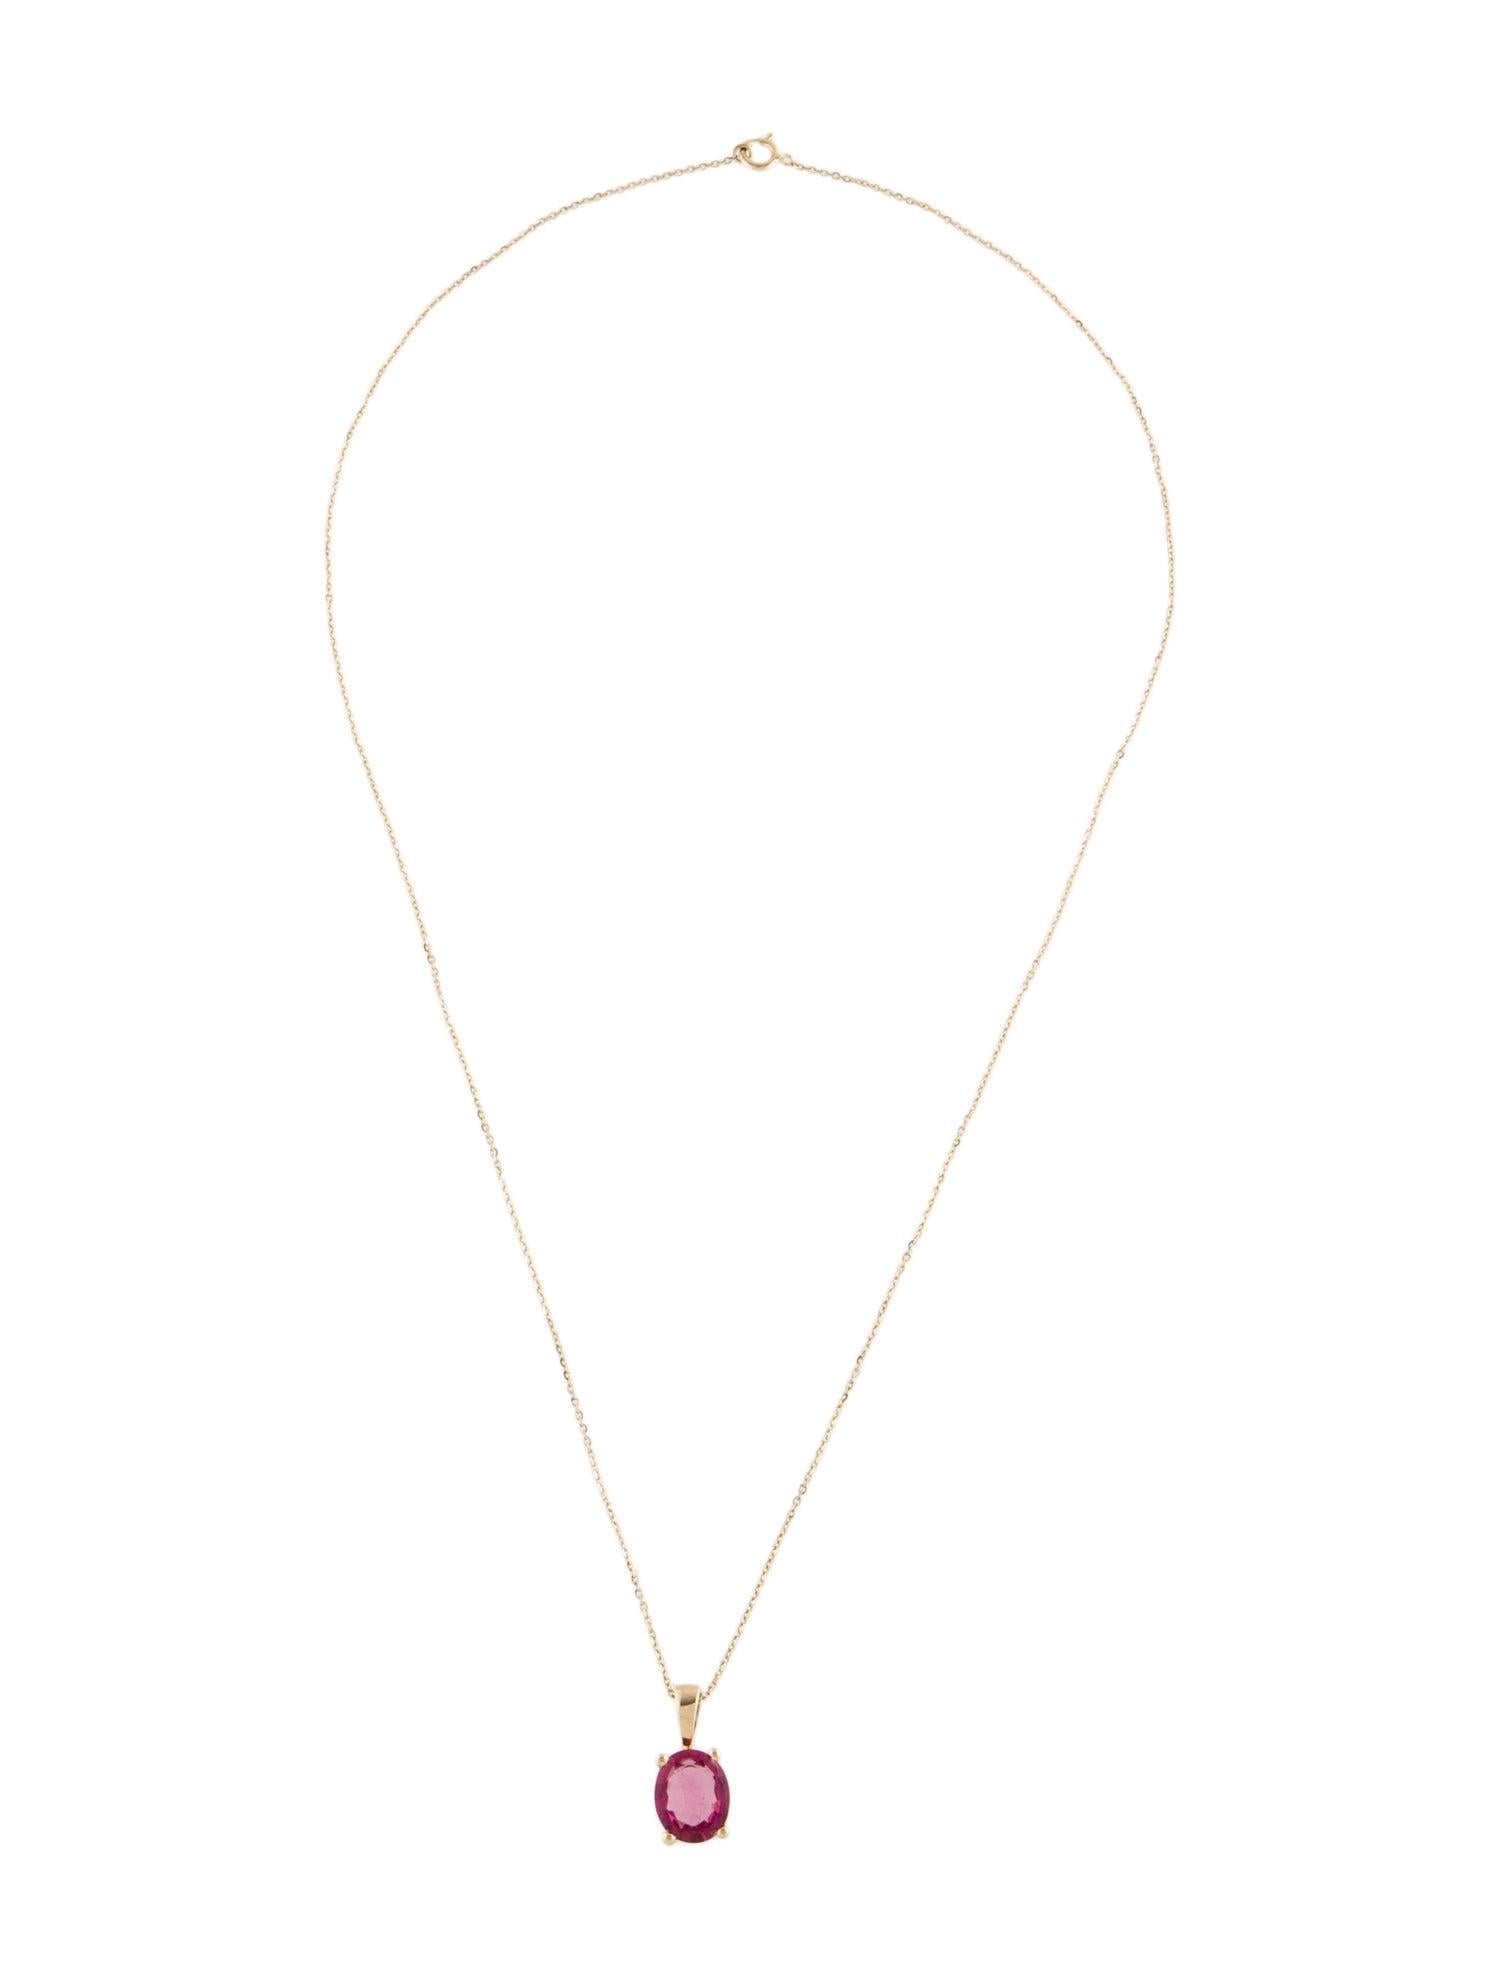 Brilliant Cut Luxury 14K Tourmaline Pendant Necklace - Stunning Gemstone Statement Jewelry